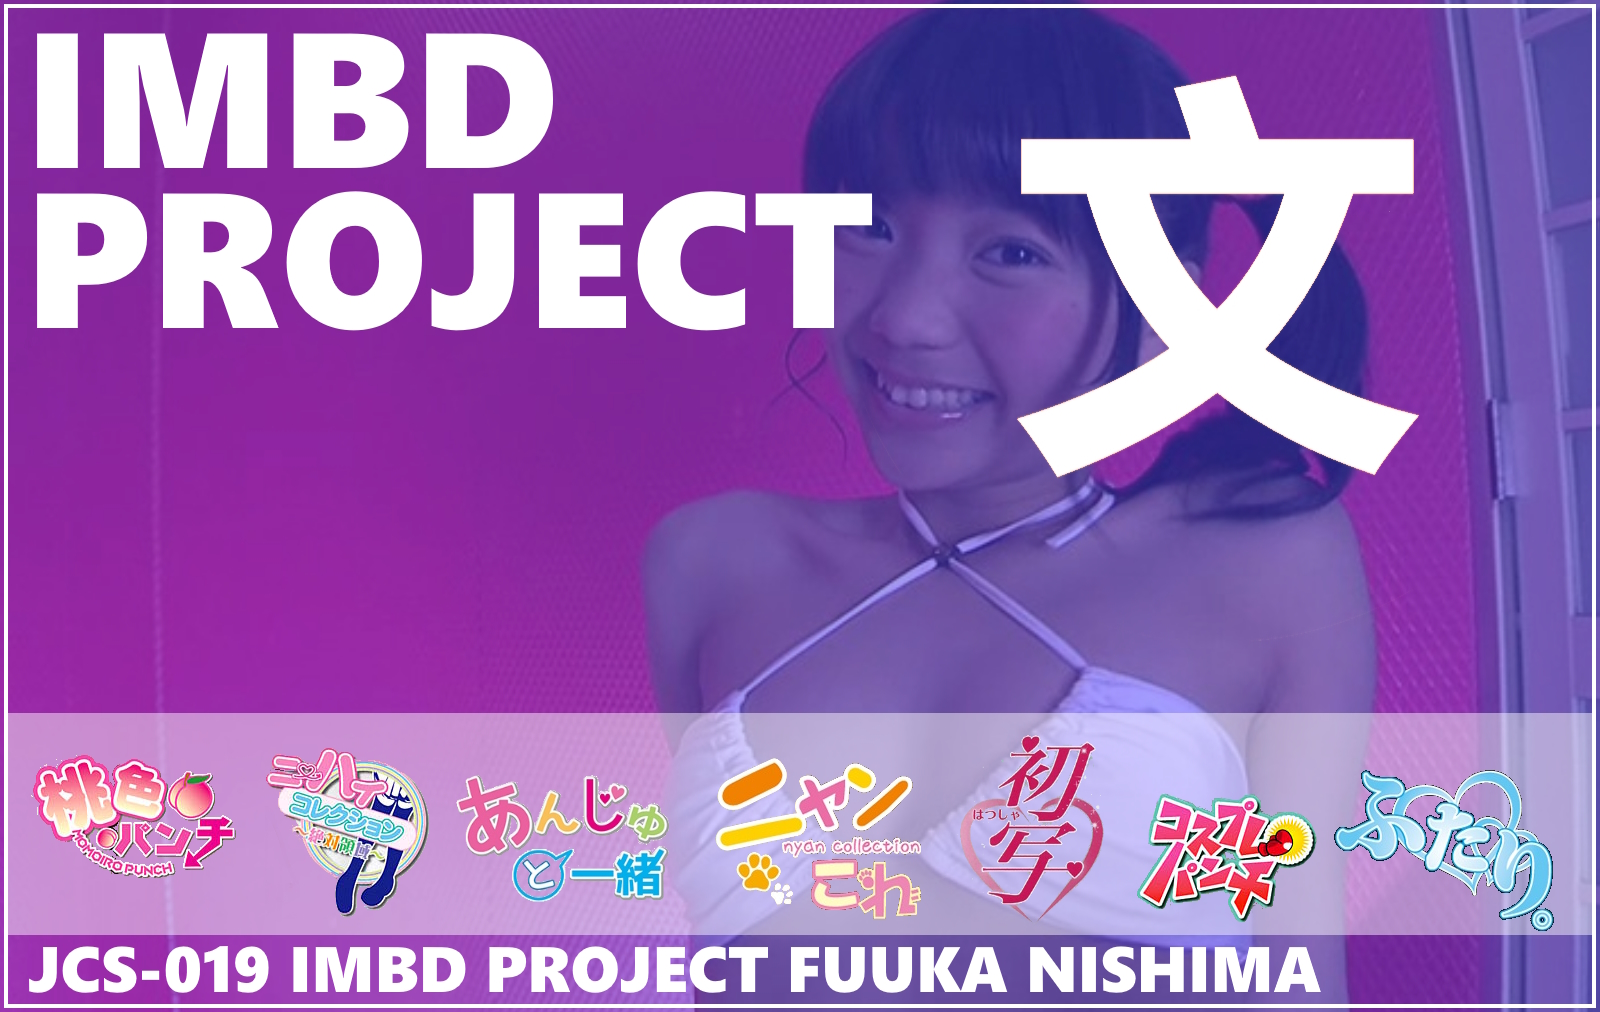 JCS-019 IMBD Project Fuuka Nishihama